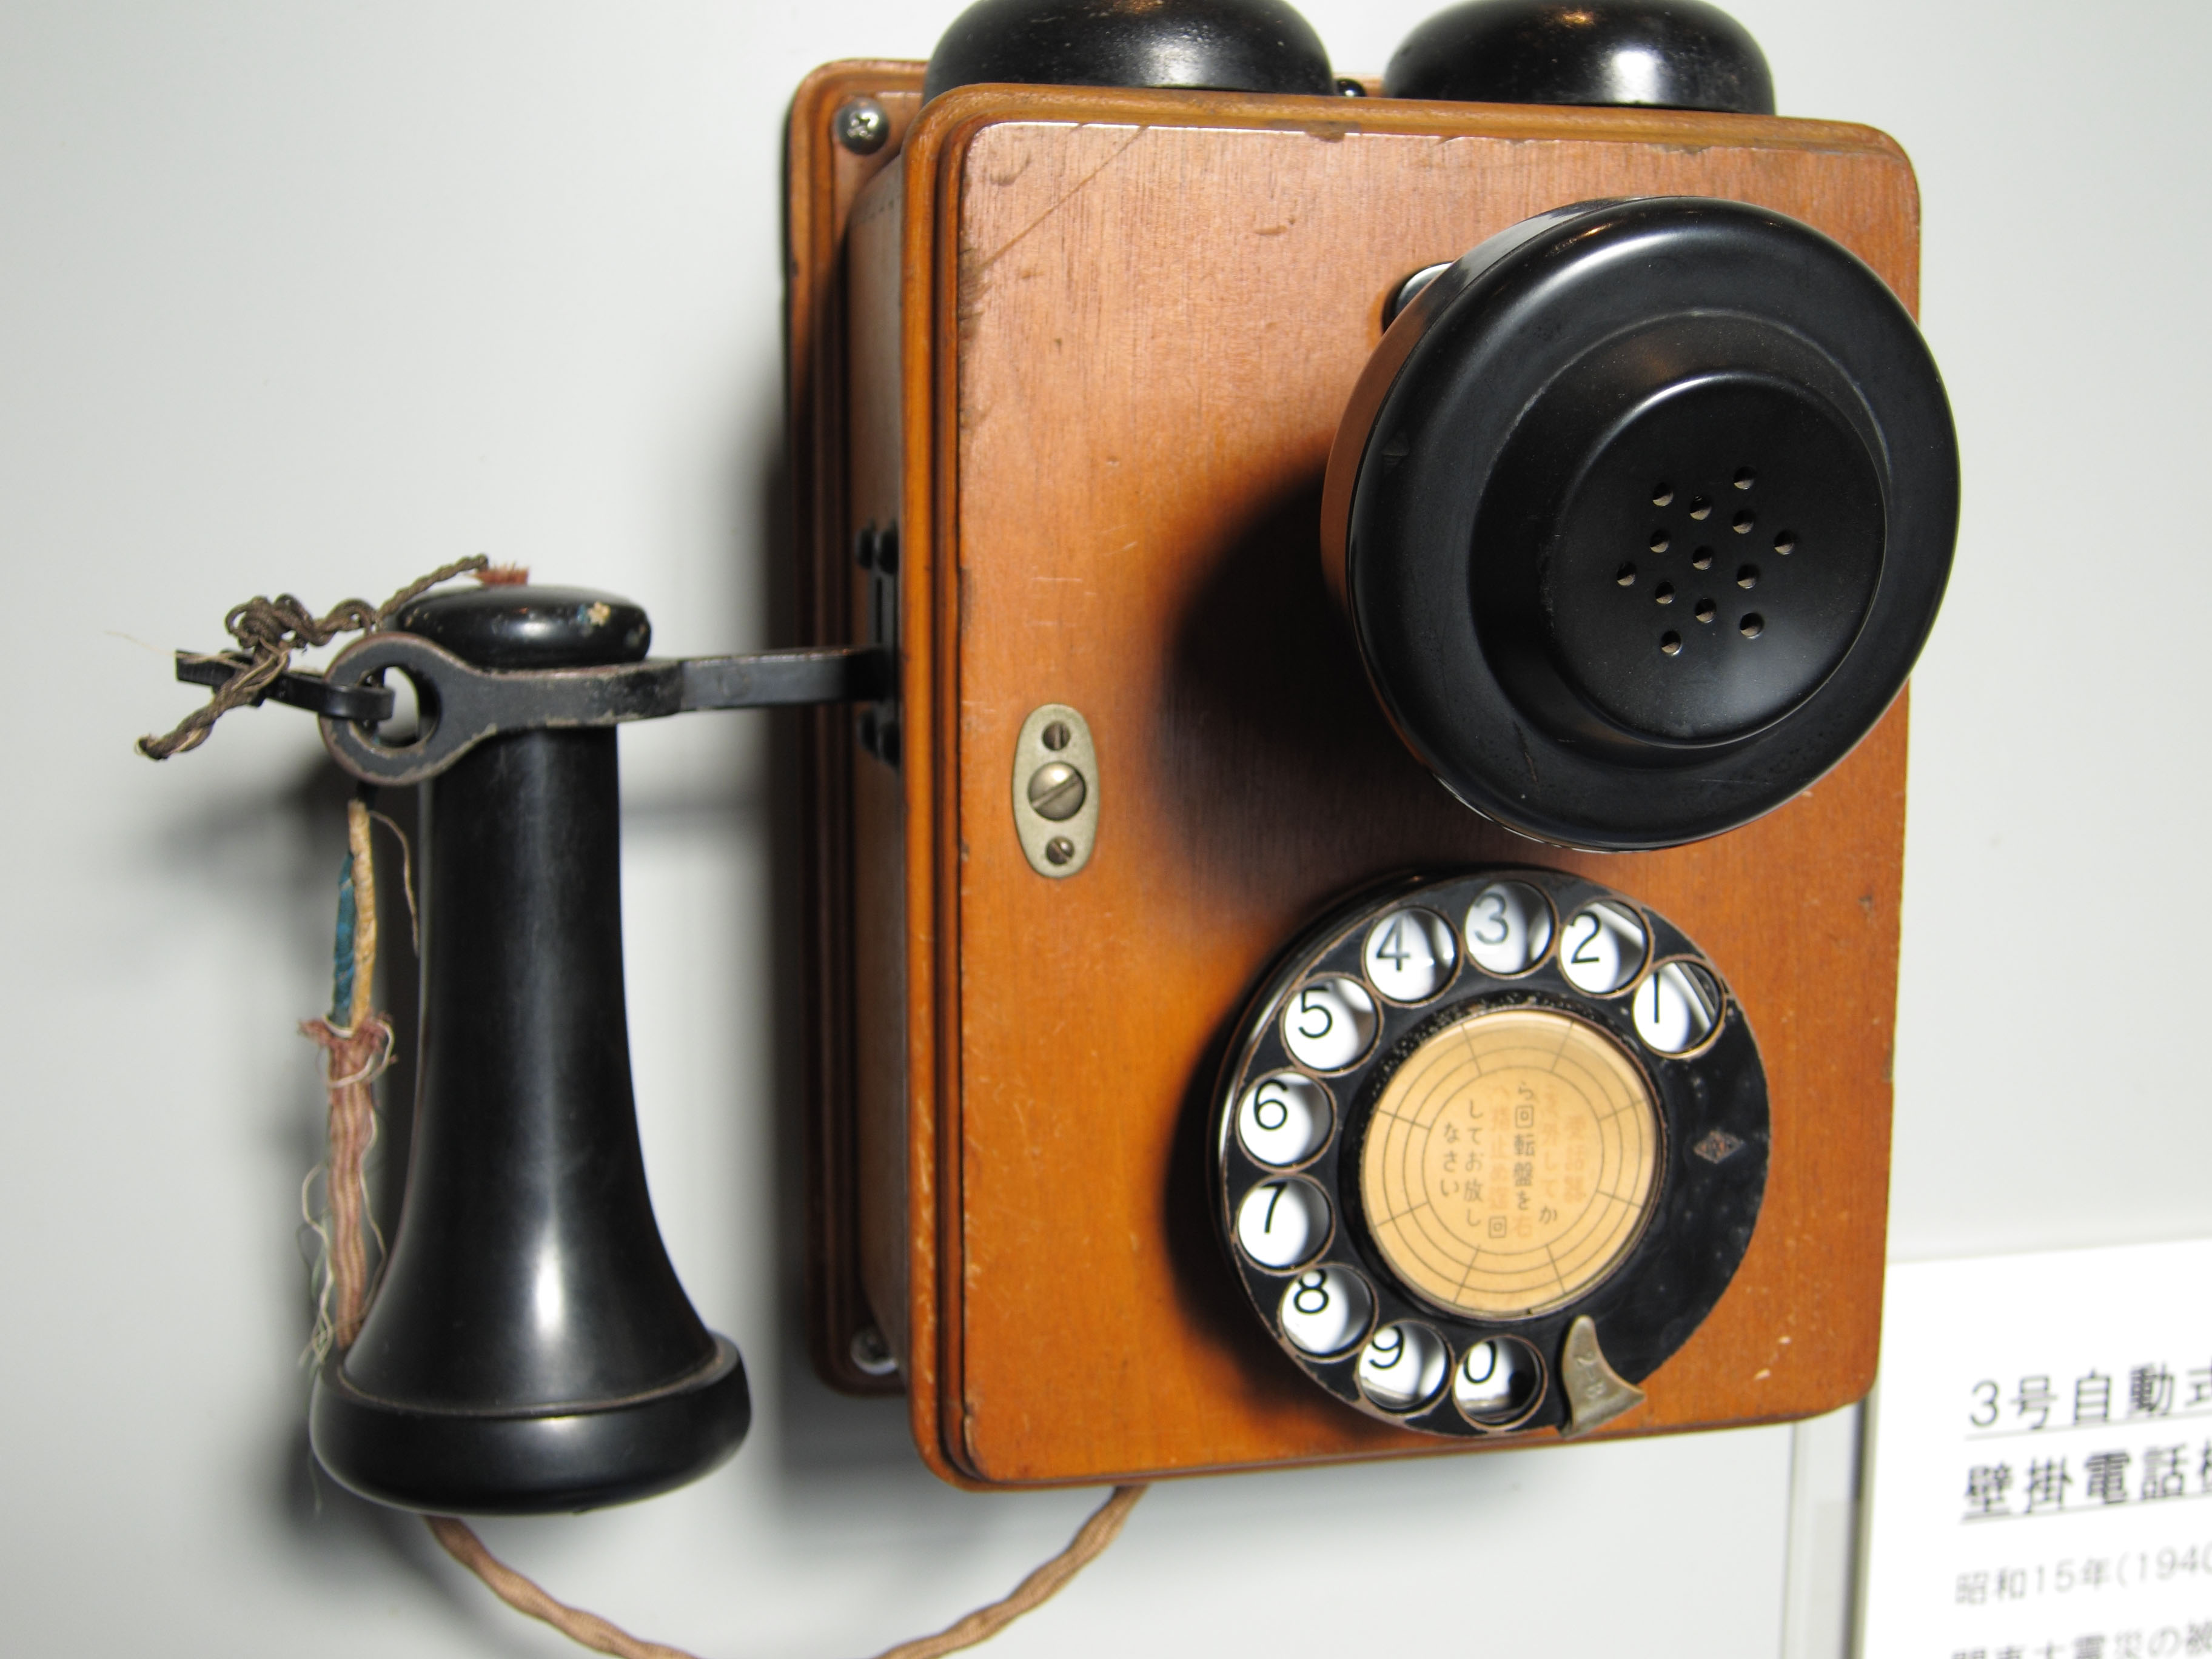 Включи звук старый телефон. Аппарат телефонный ge 9320. Телефонный аппарат НКВД. Старый телефон. Старинный телефон.